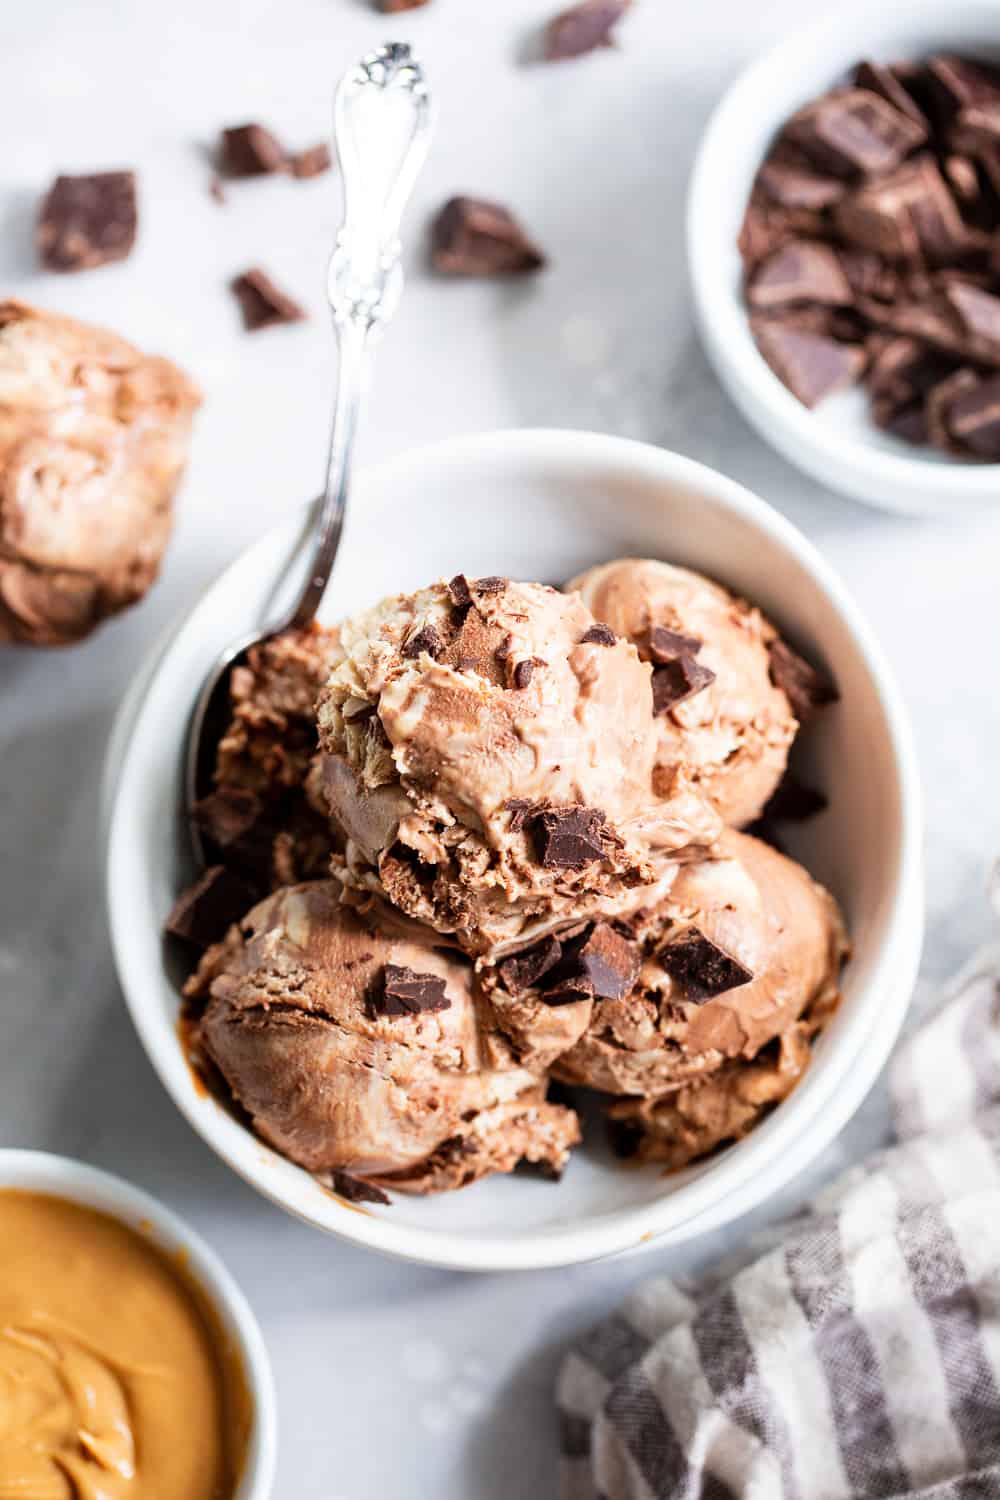 https://www.paleorunningmomma.com/wp-content/uploads/2020/08/peanut-butter-chocolate-ice-cream-8.jpg